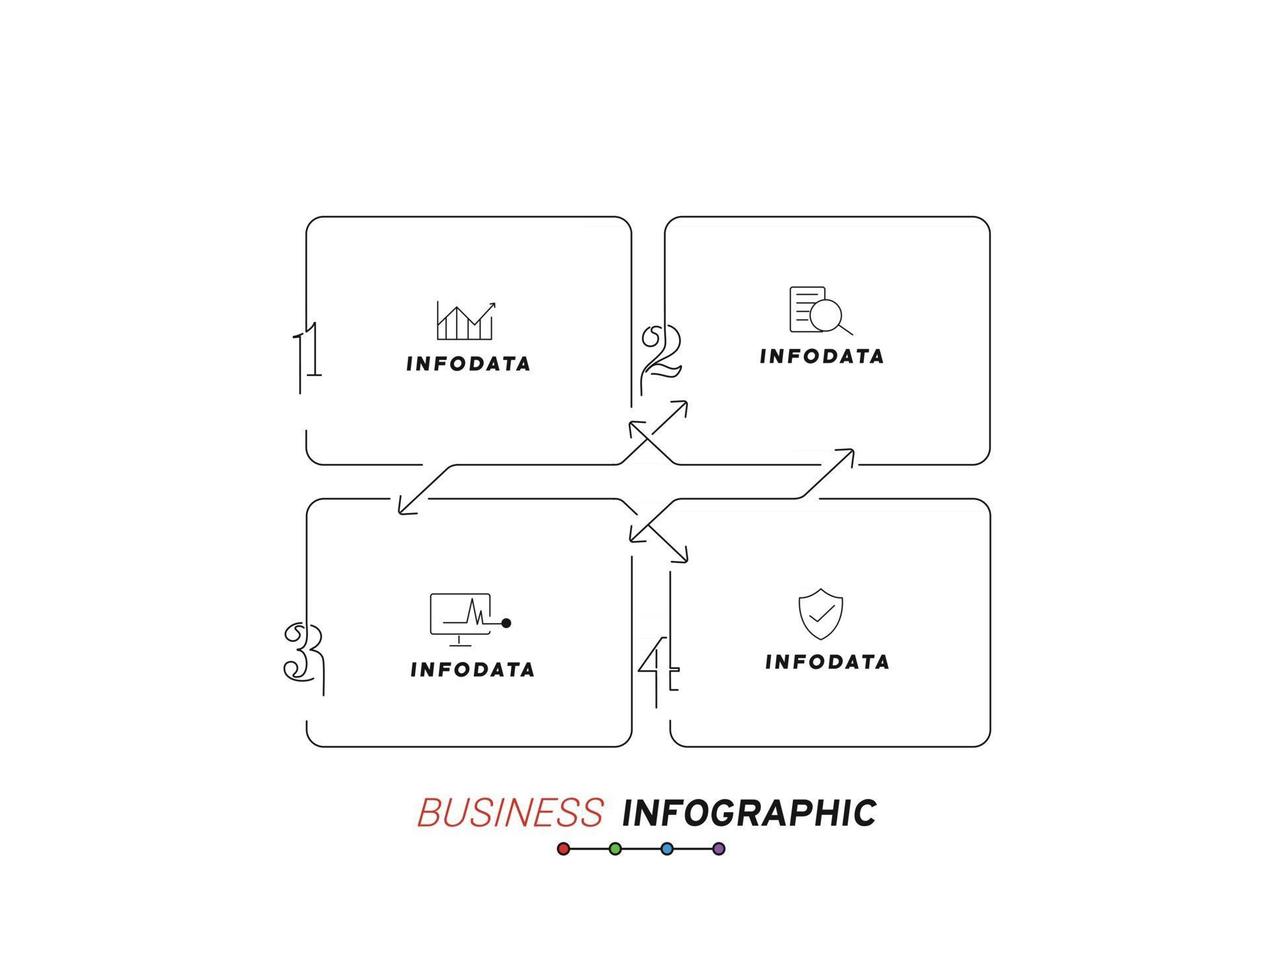 elementi di design di infografica aziendali set di infografica 3d vettore